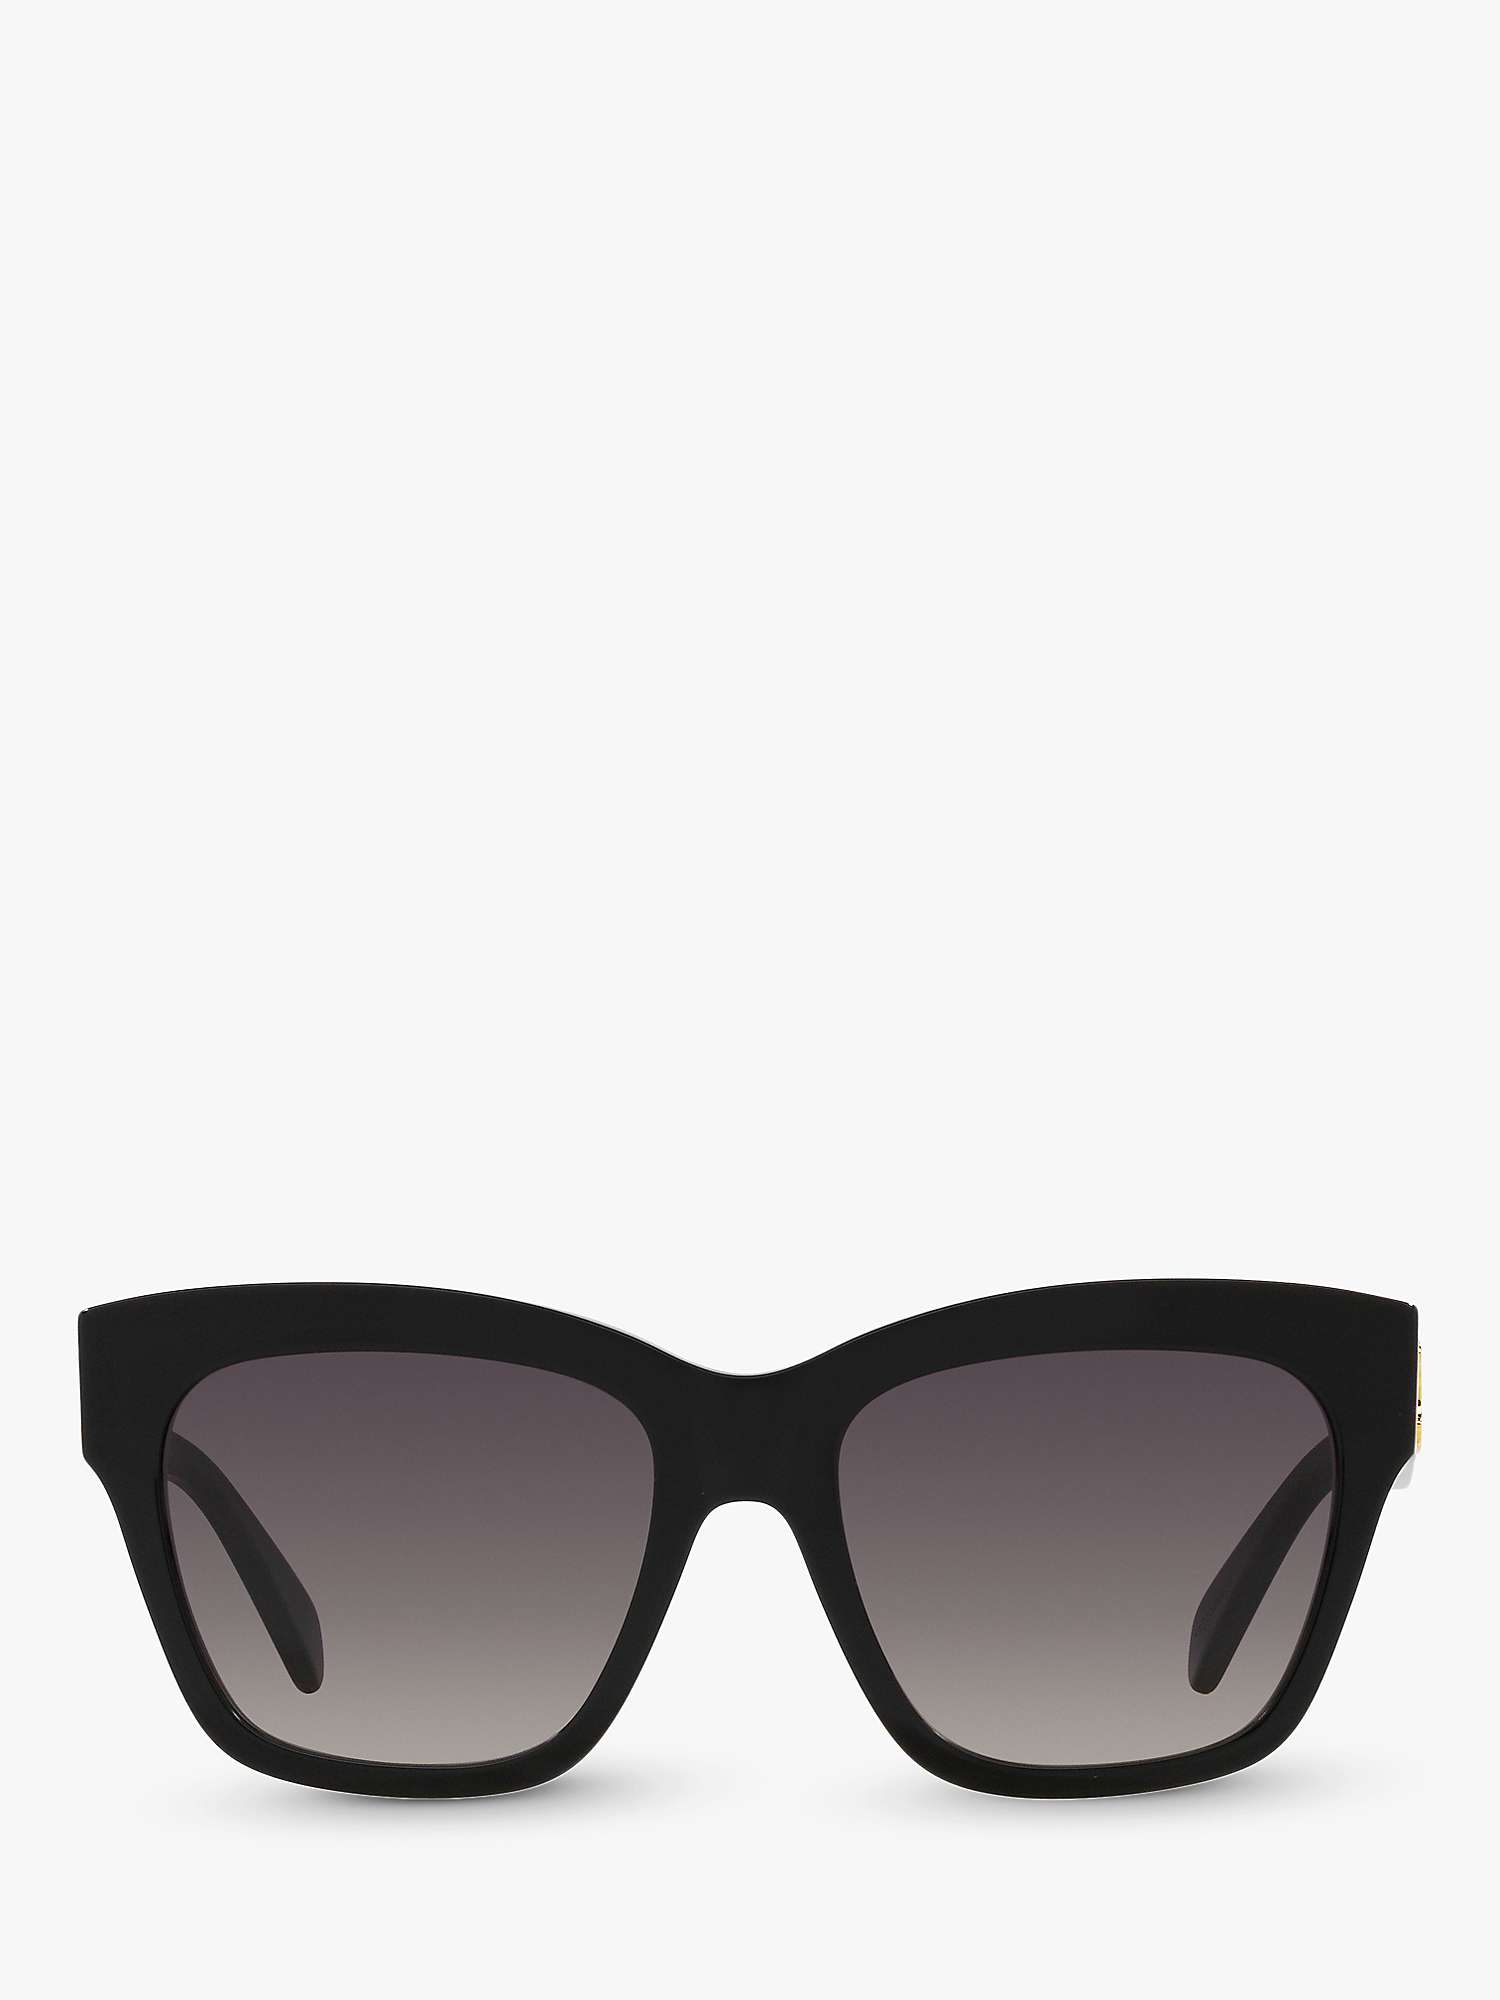 Buy Celine CL40253I Women's Cat's Eye Sunglasses, Black/Grey Gradient Online at johnlewis.com